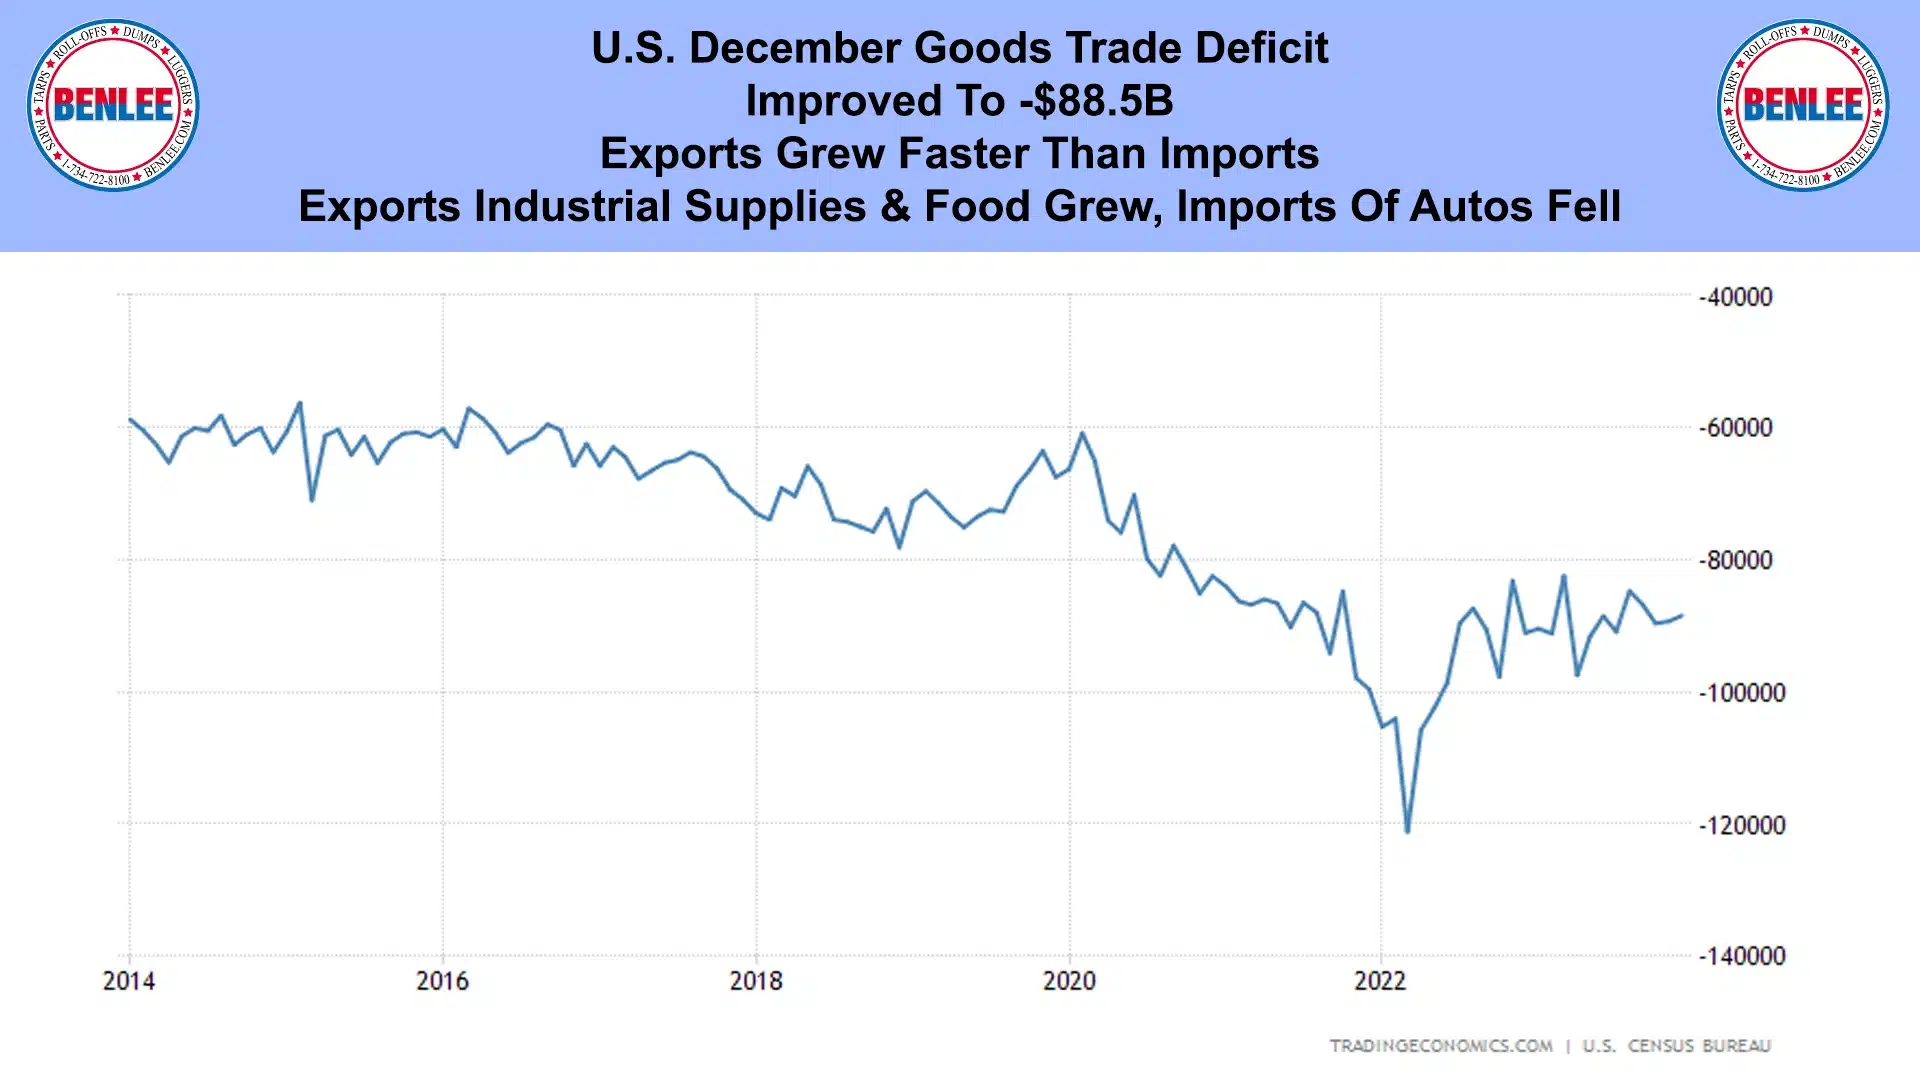 U.S. December Goods Trade Deficit